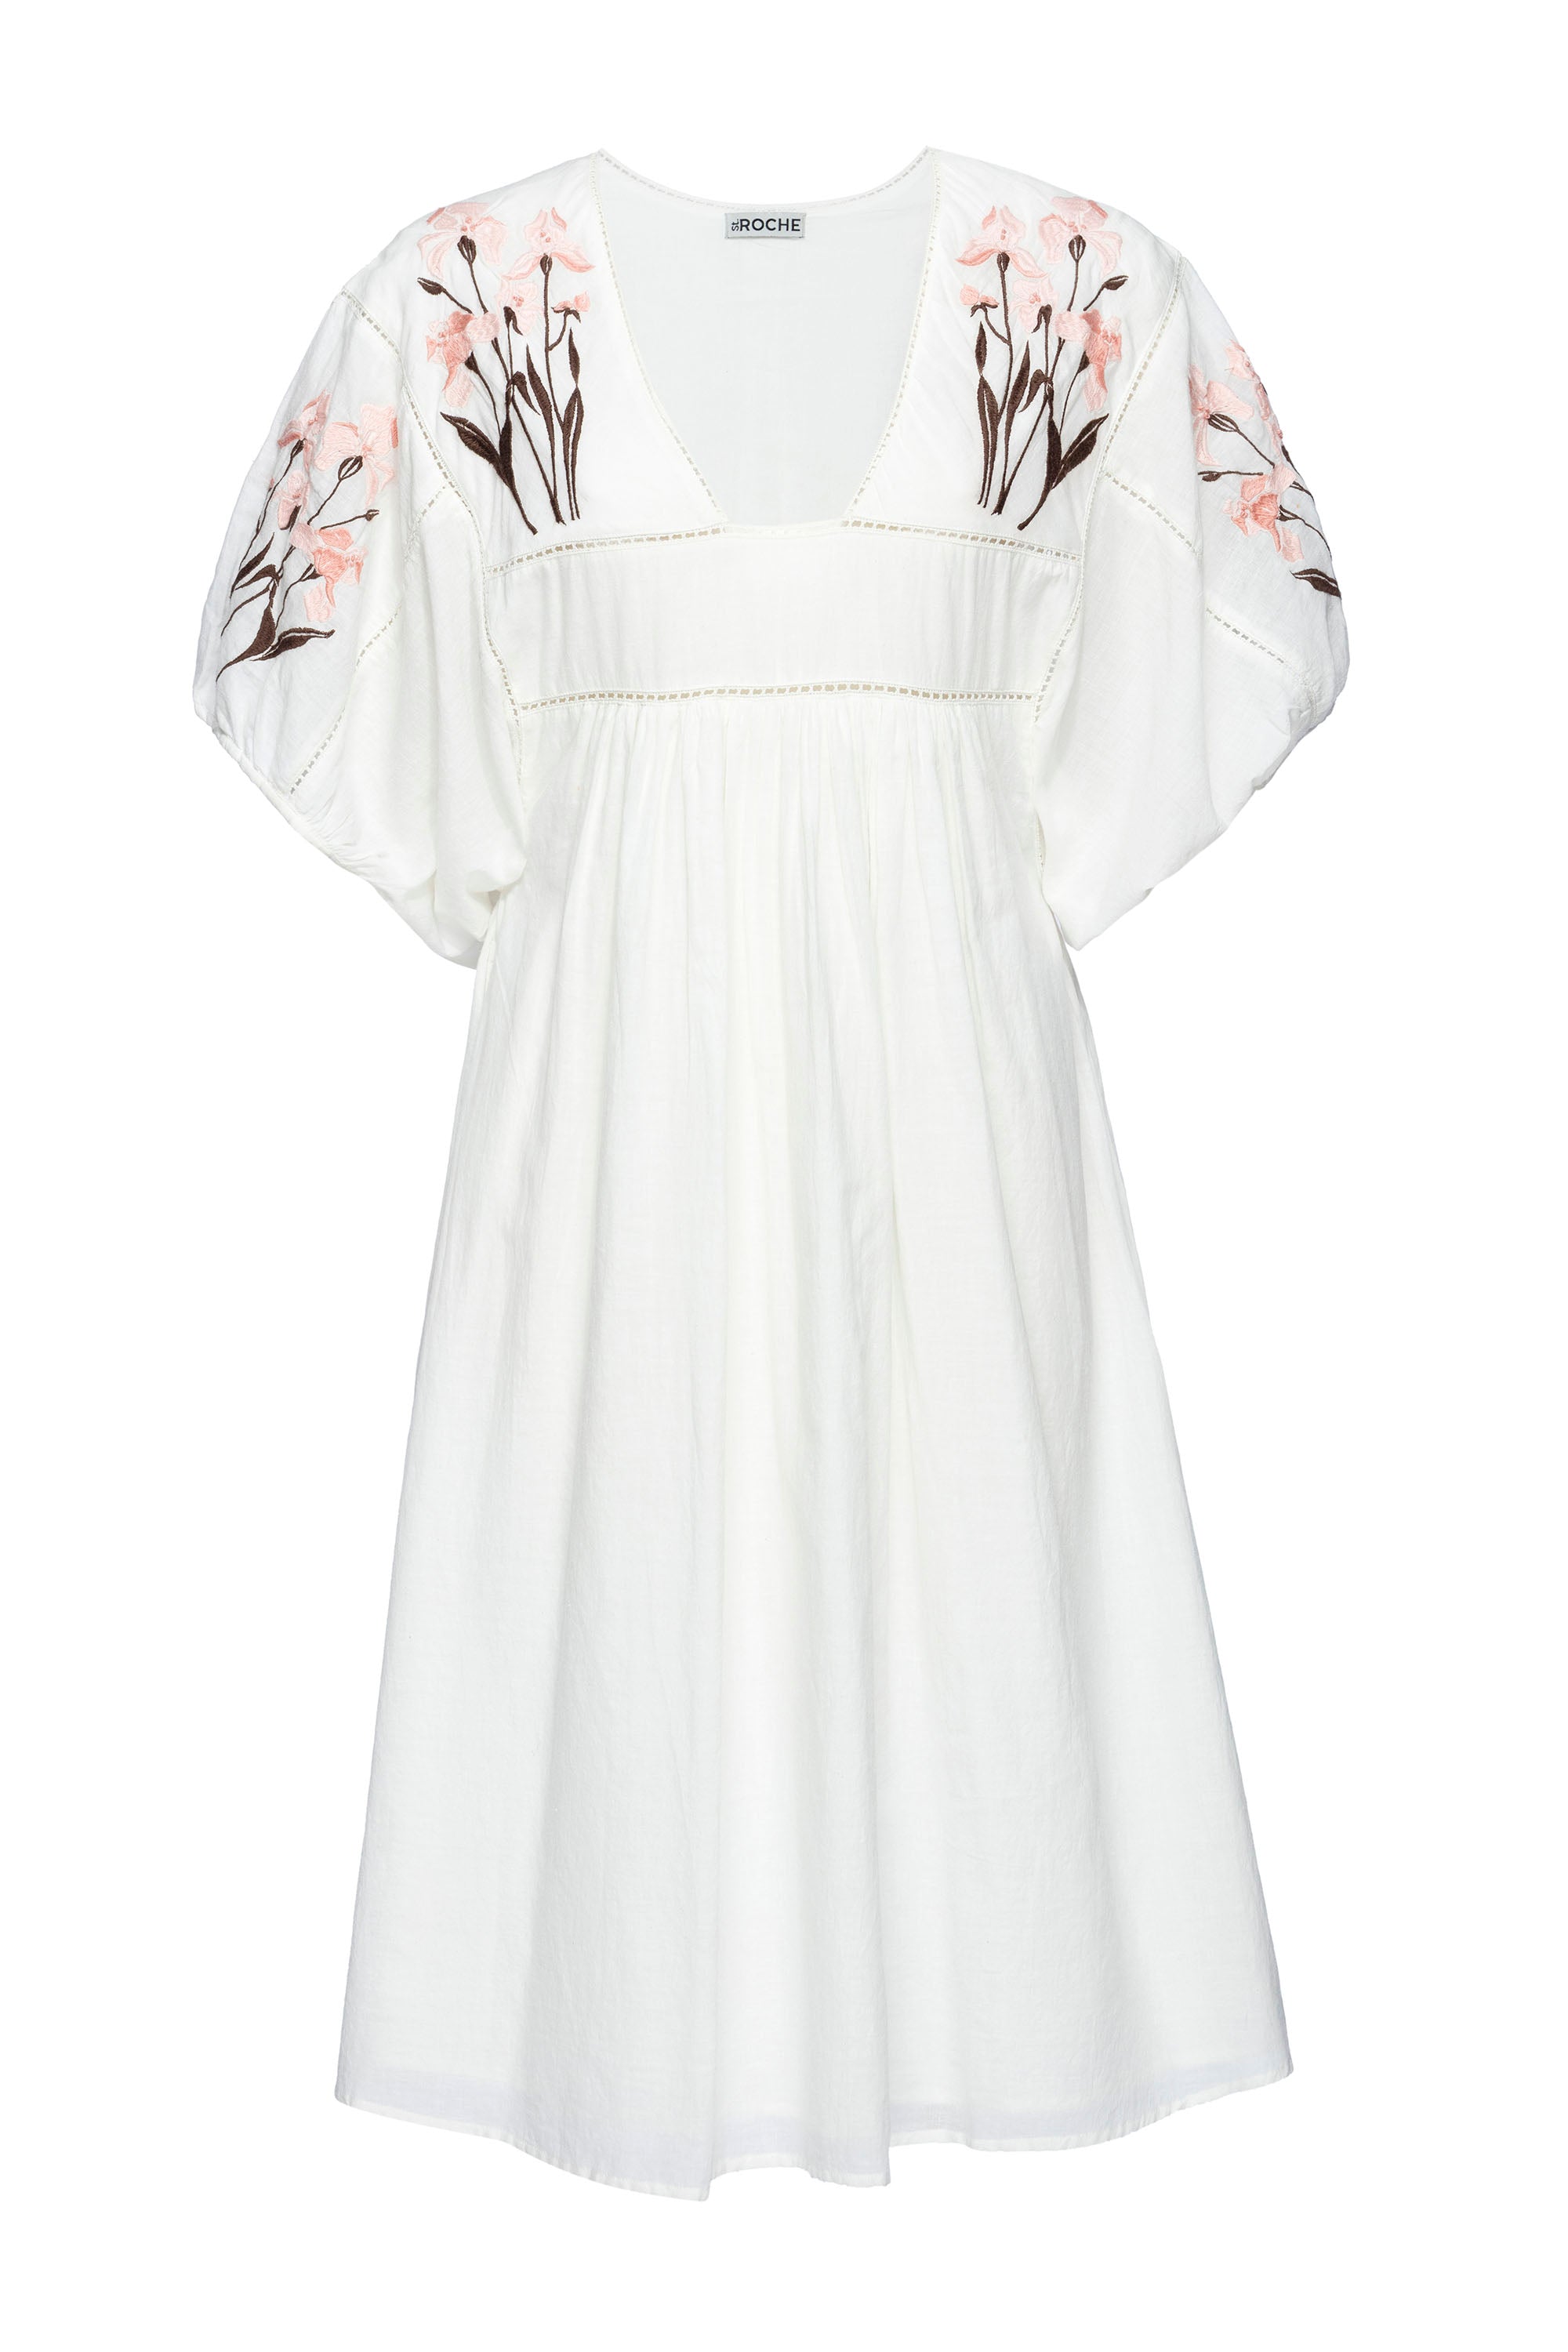 Women’s White Lake Dress - Ivory Small St. Roche